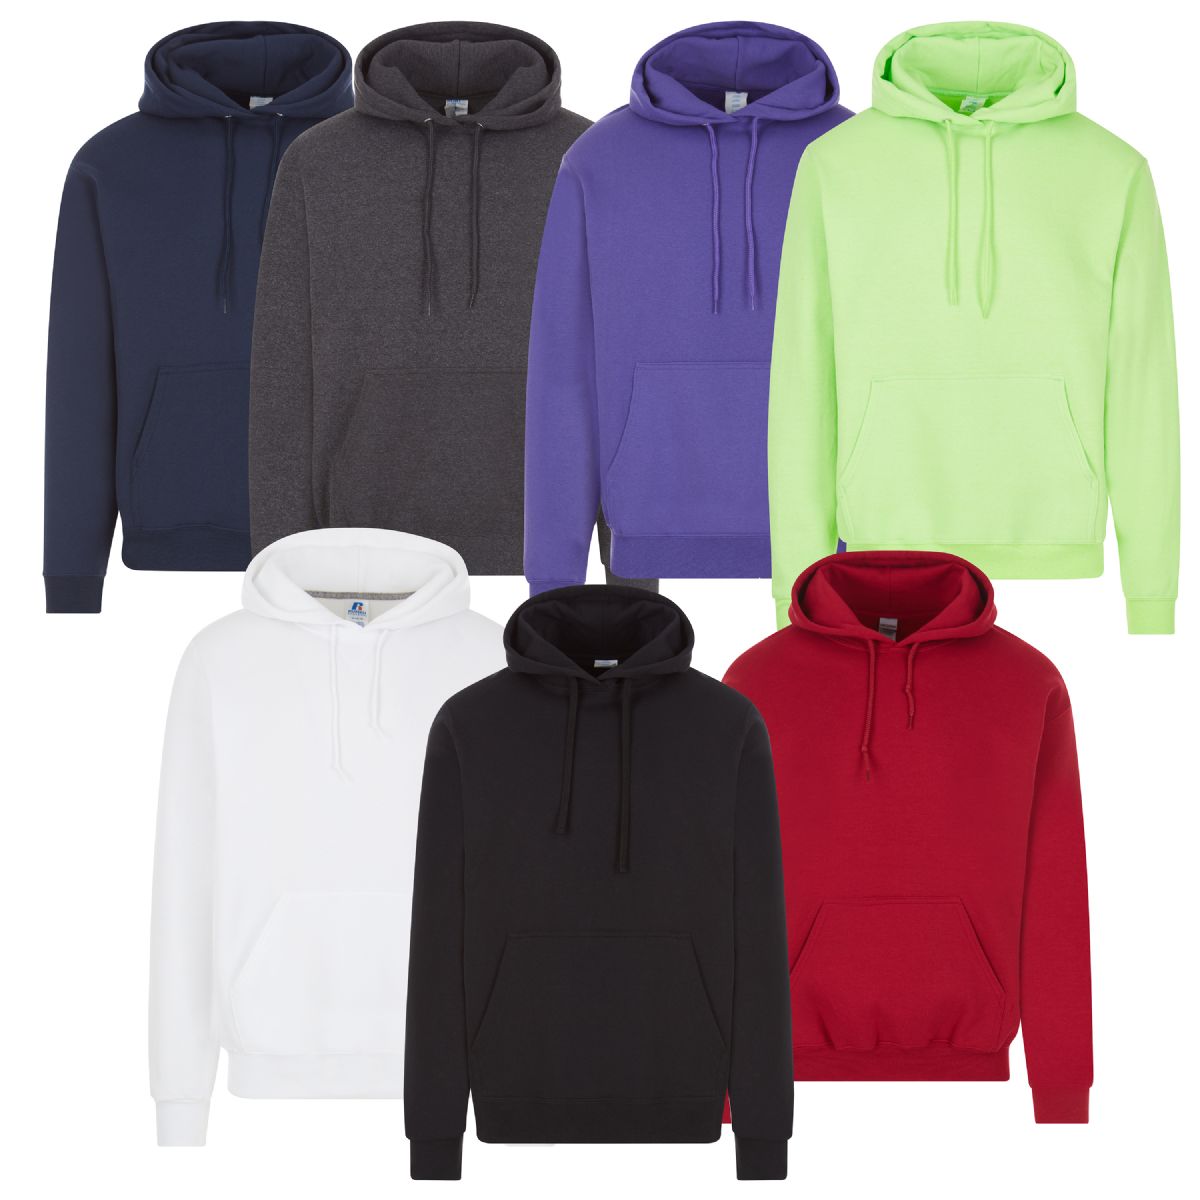 24 Pieces of Unisex Irregular Cotton Hoodie Sweatshirt In Assorted Colors Medium